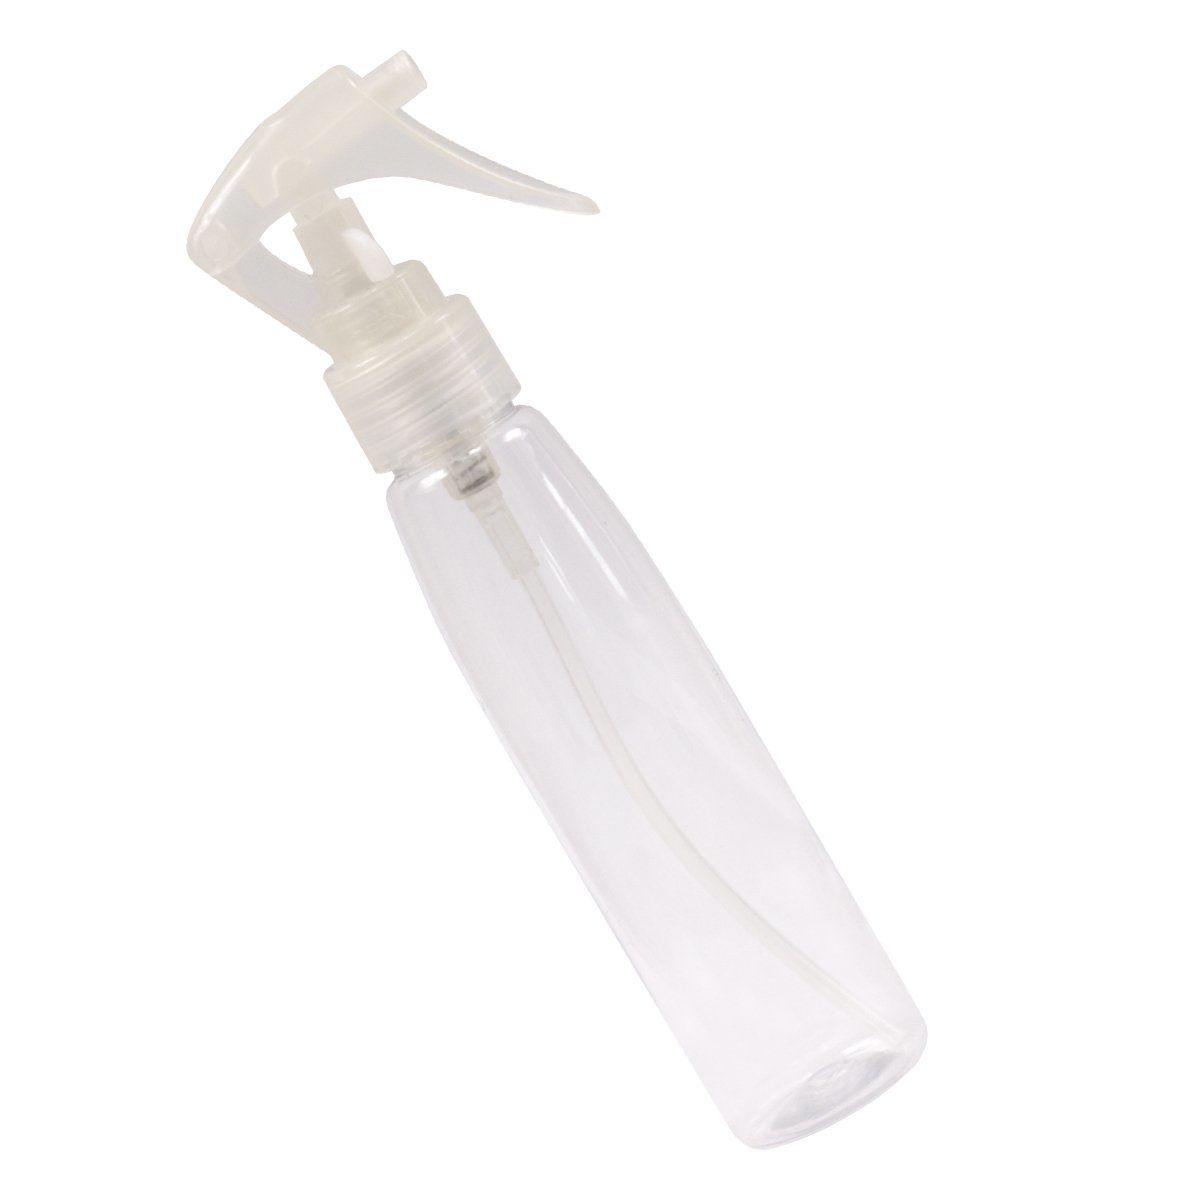 Flacon spray vide en plastique - 100ml - Couture Créations